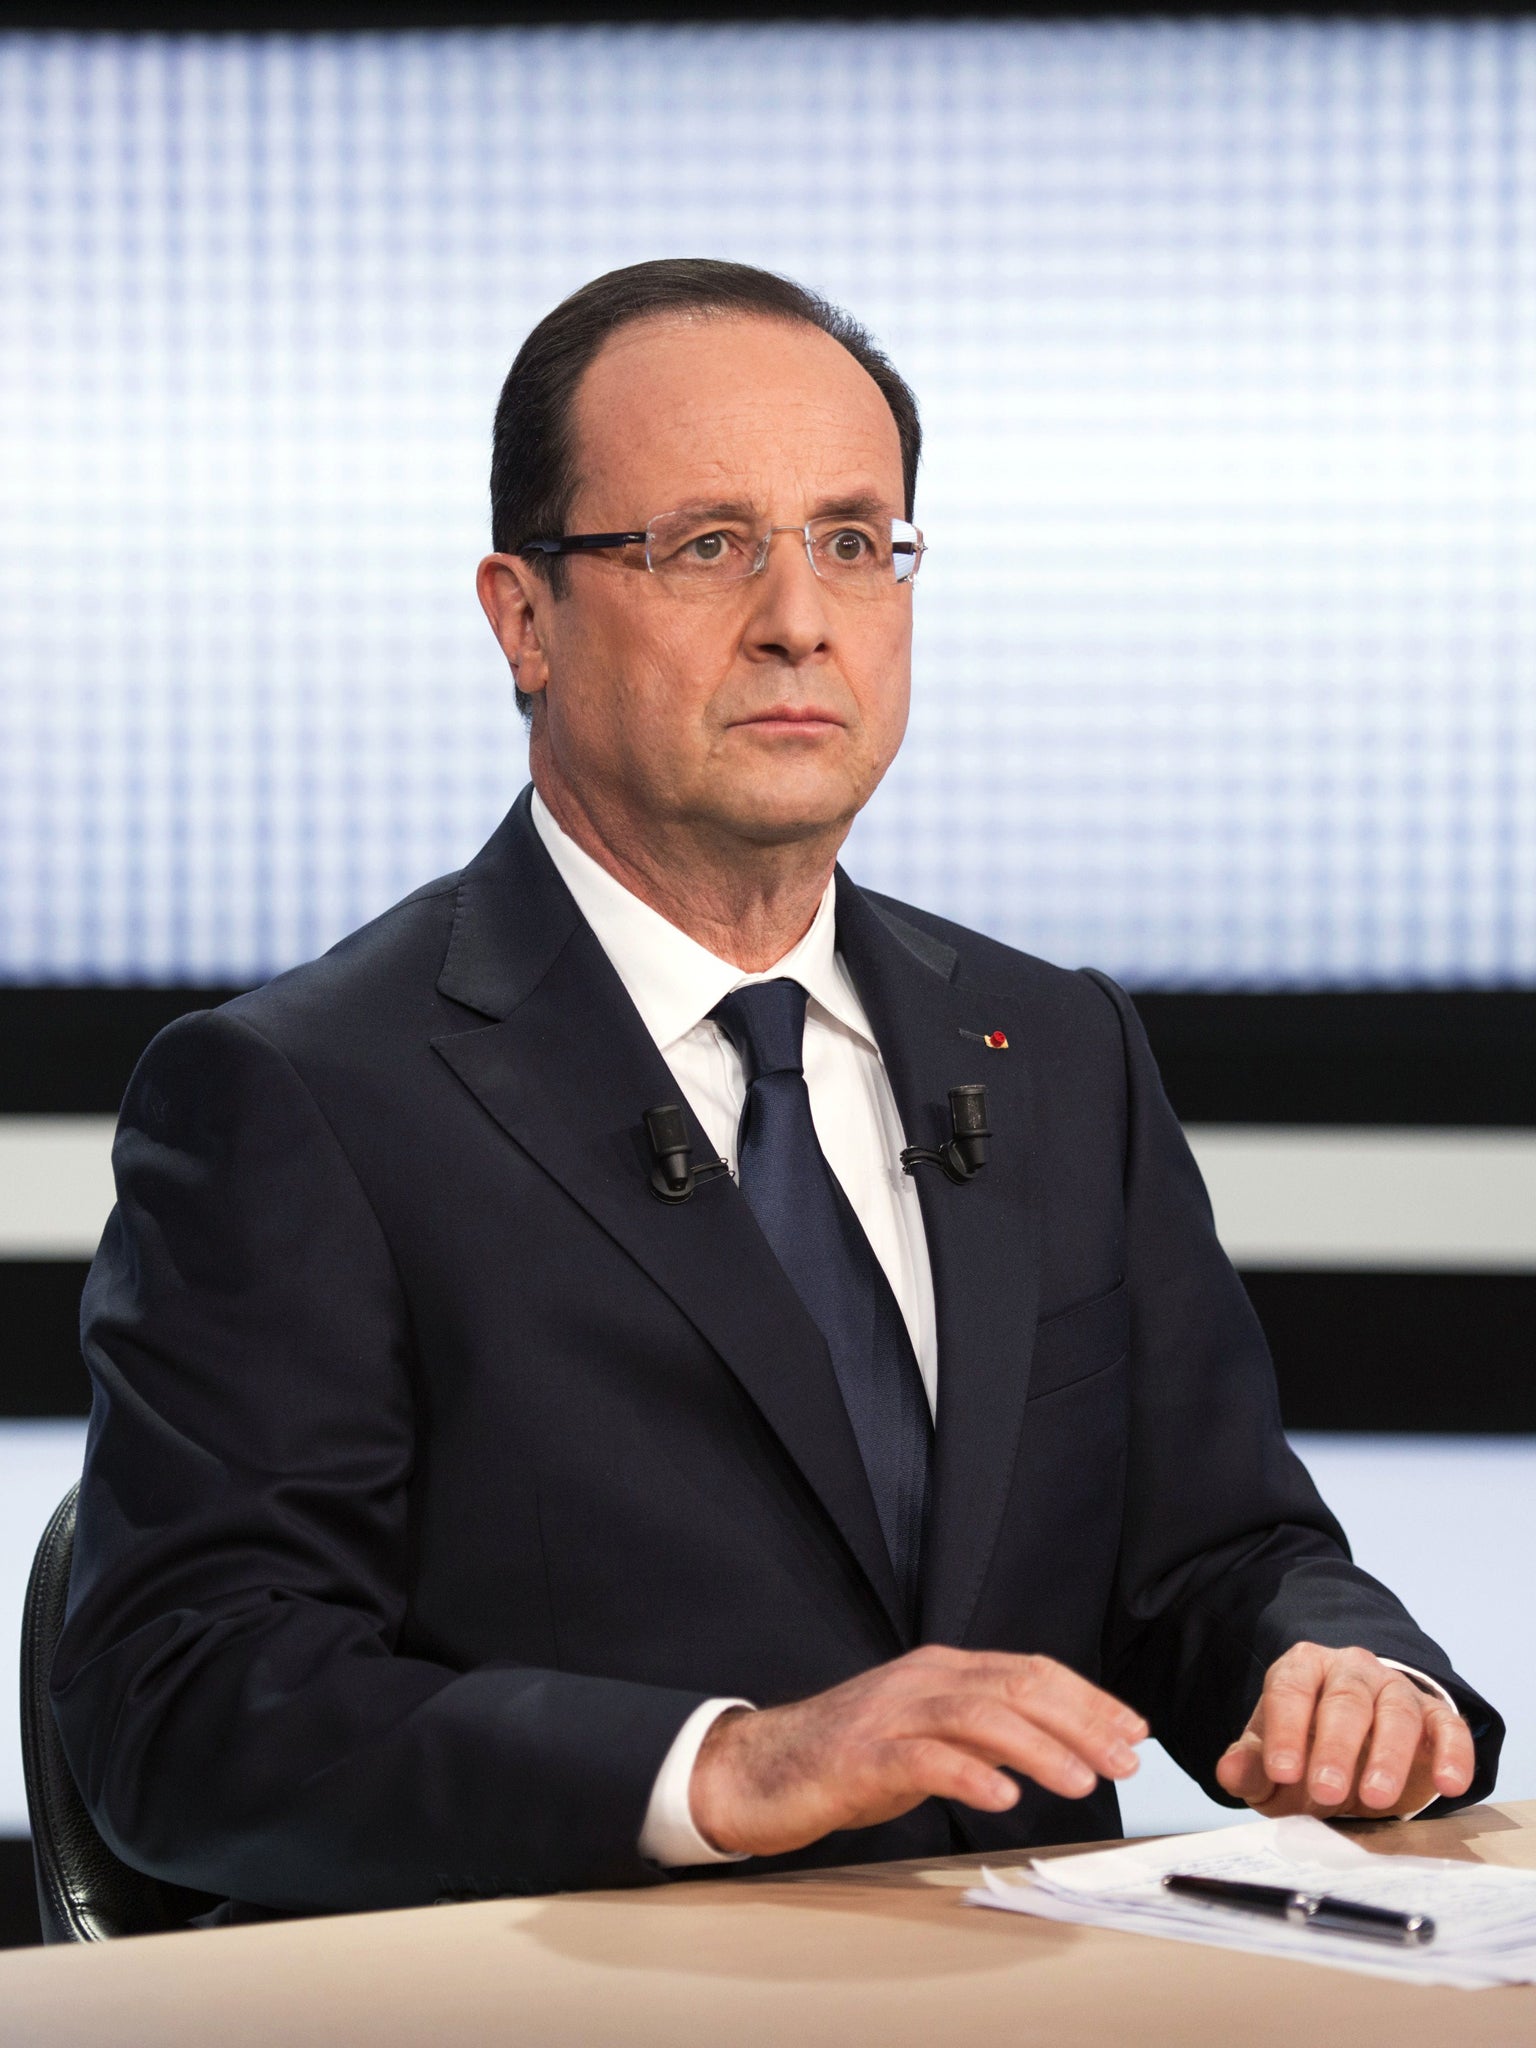 Beleaguered Franch president François Holland appears on TV